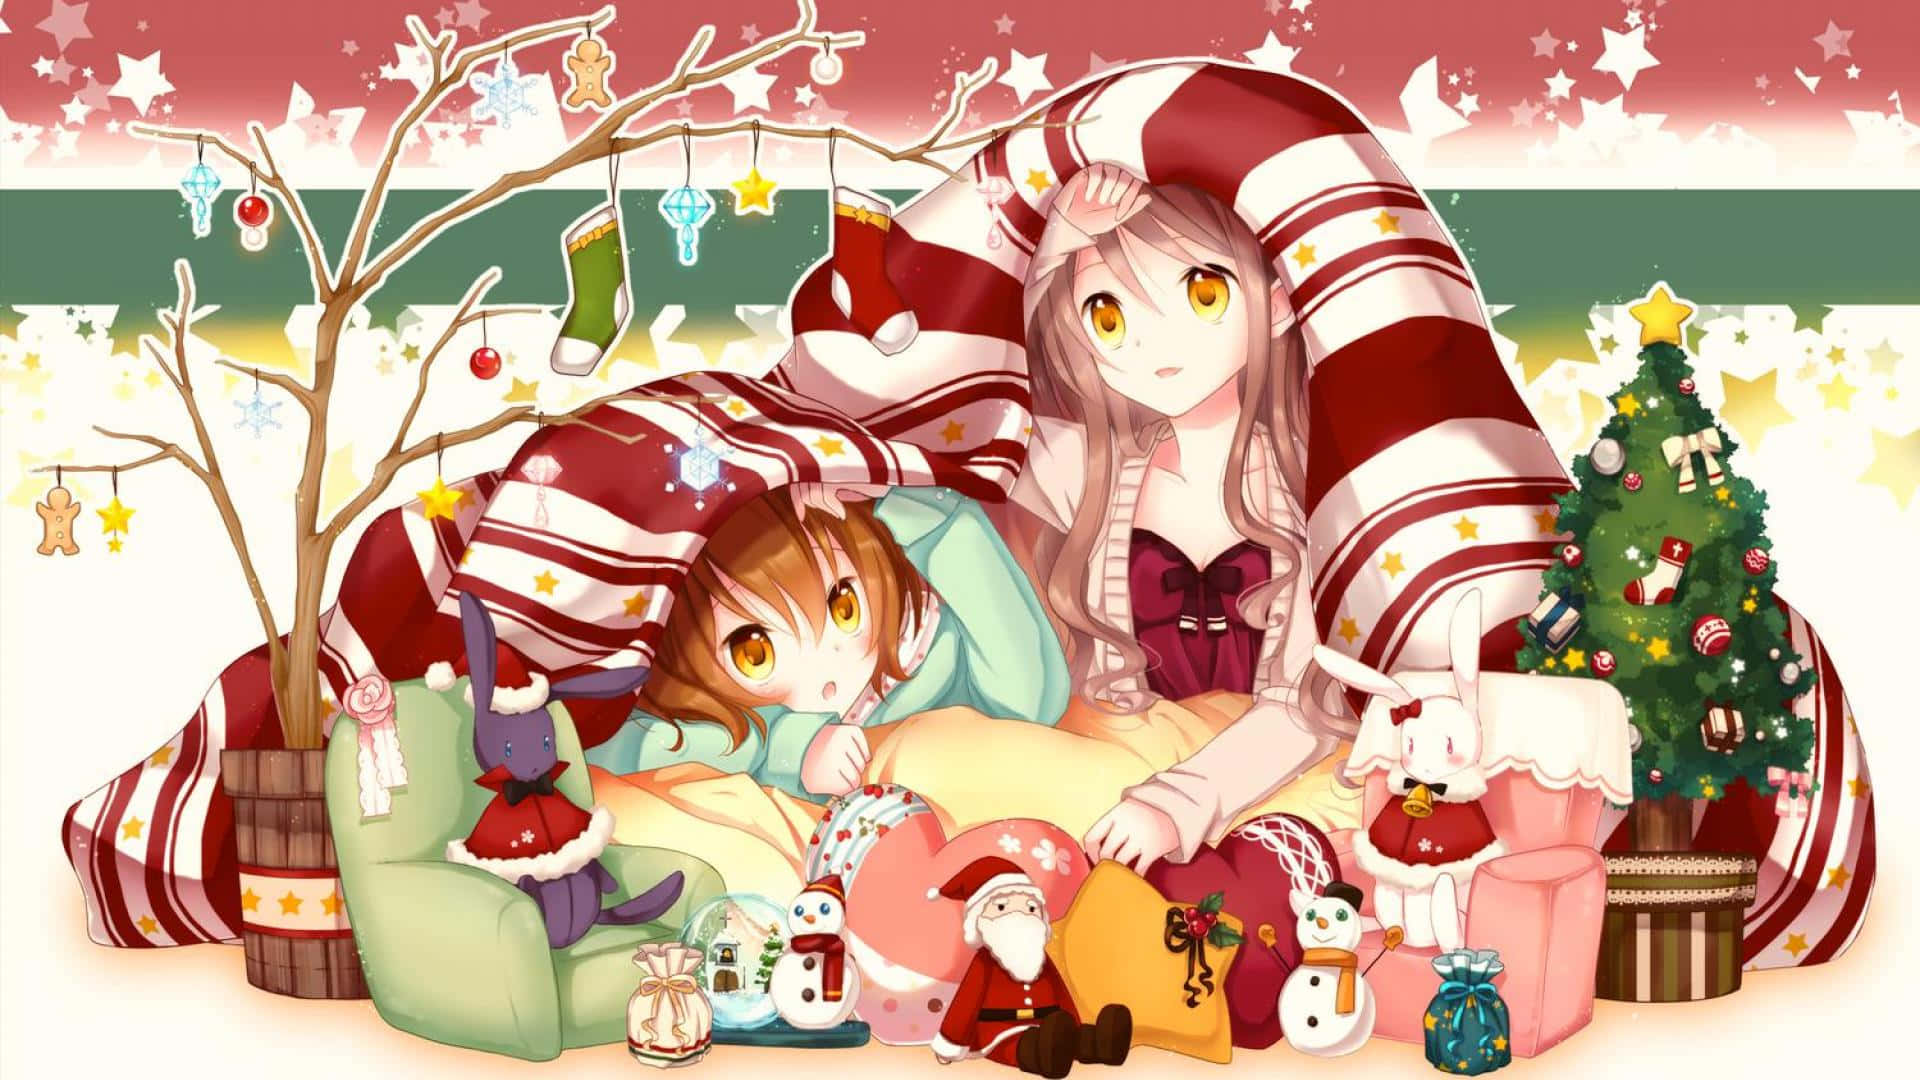 Celebrate the joy of Anime this Christmas